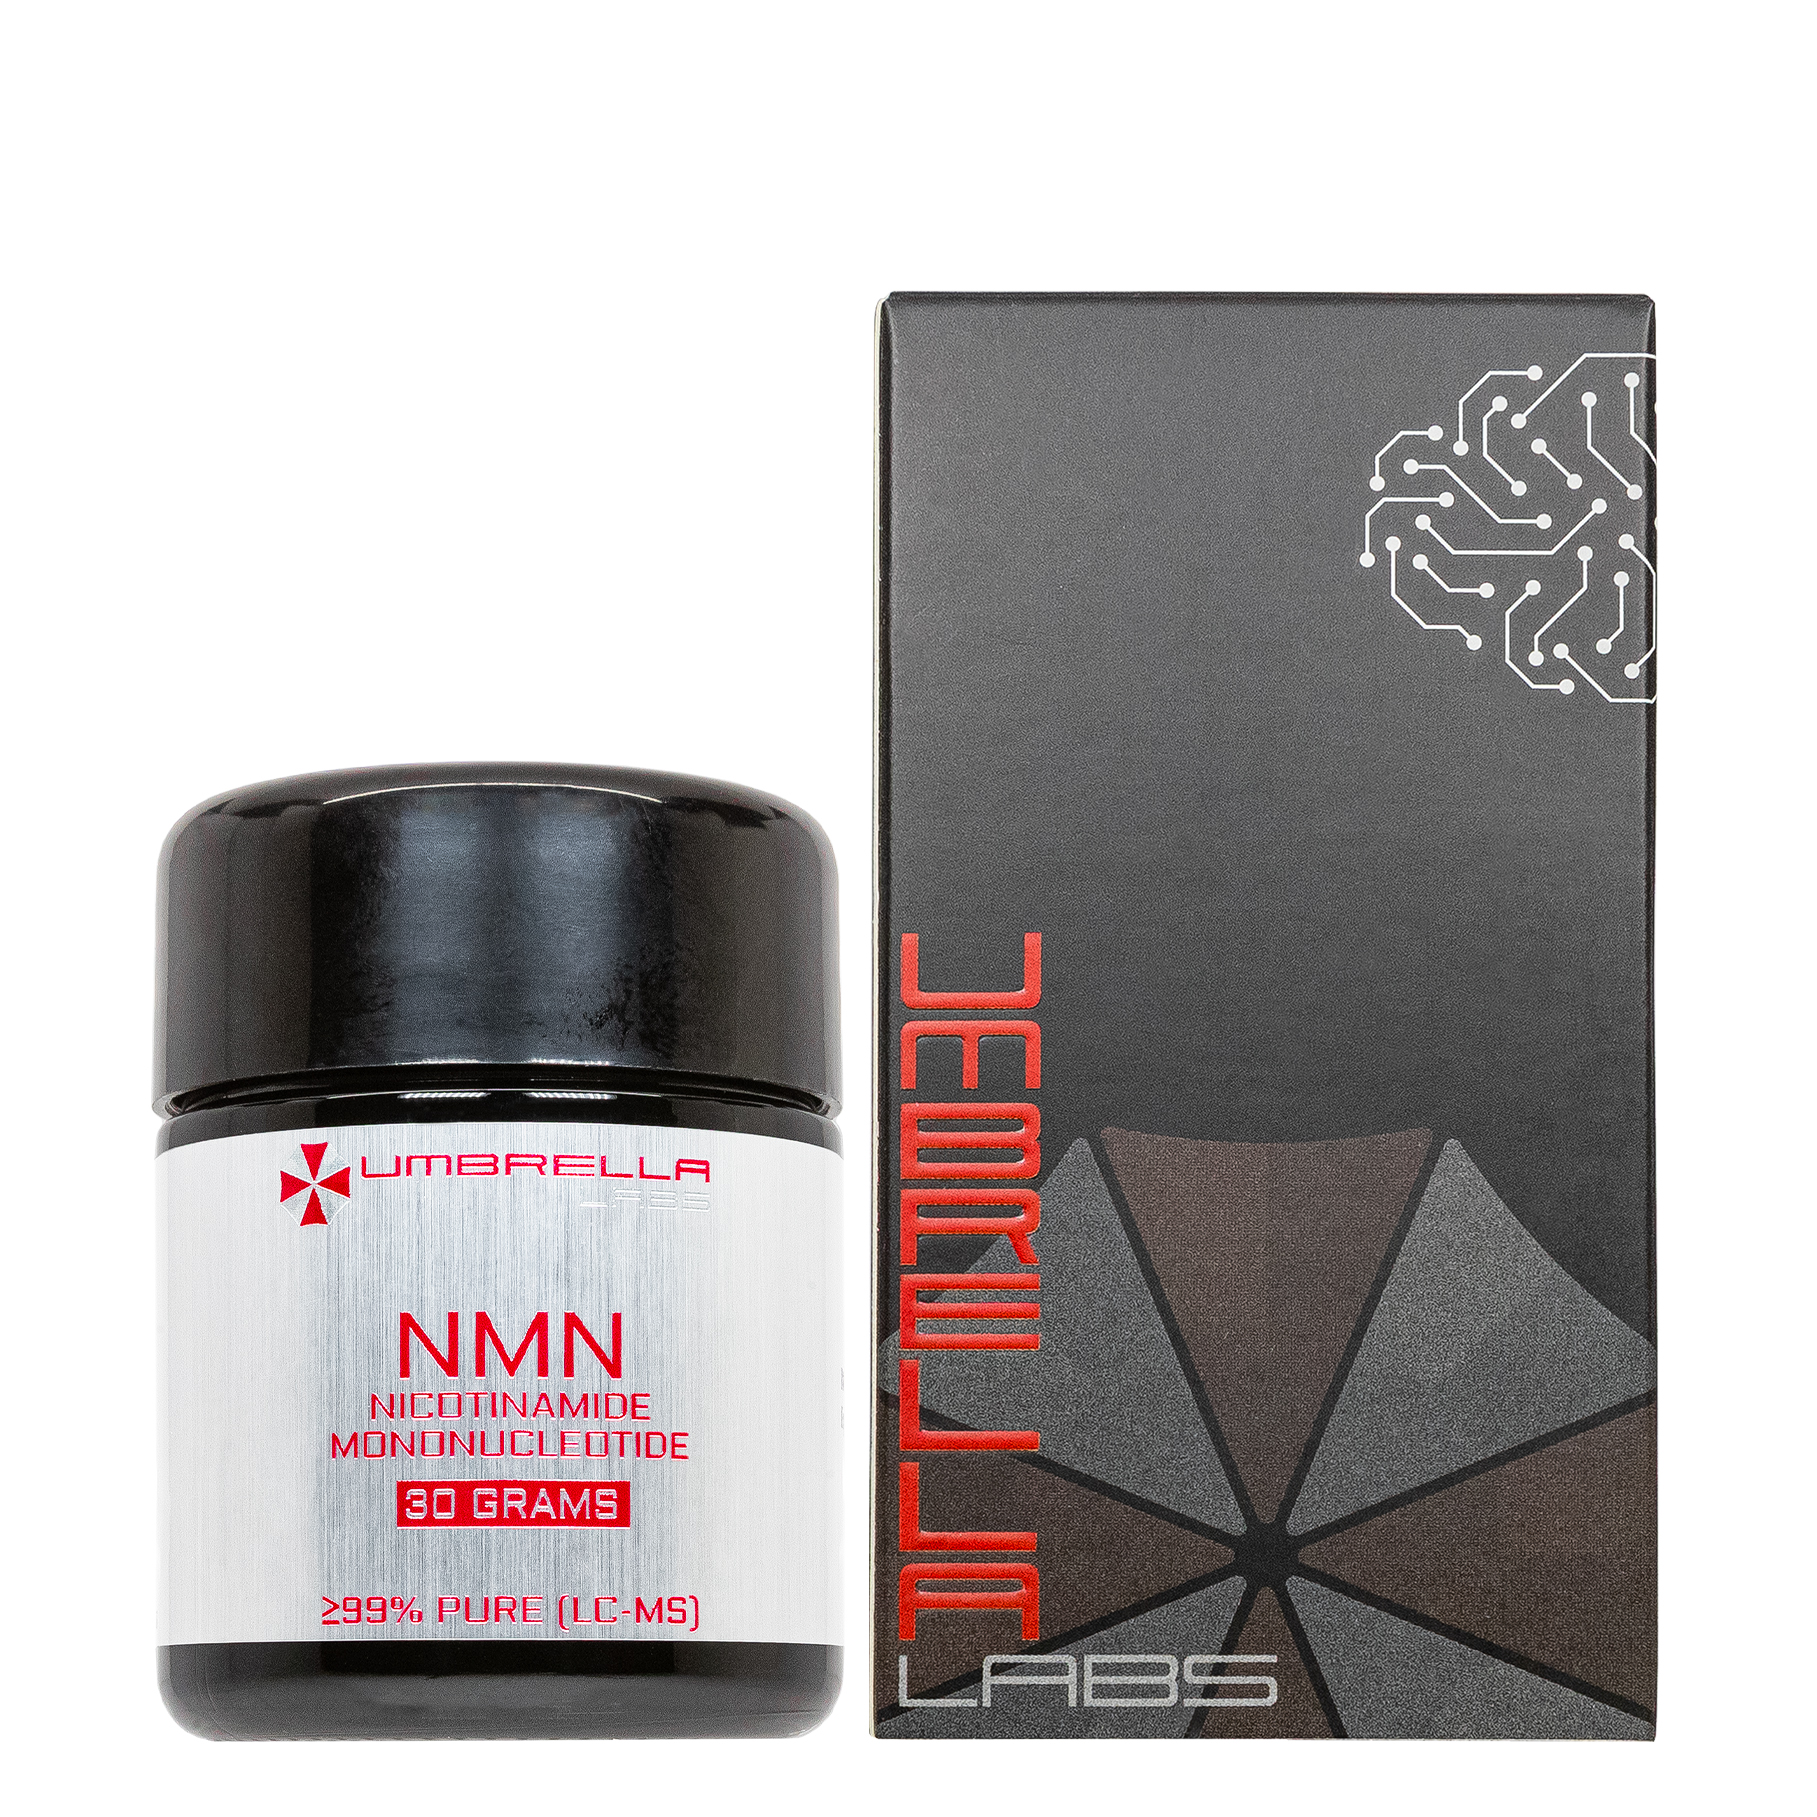 nmn (nicotinamide mononucleotide) powder